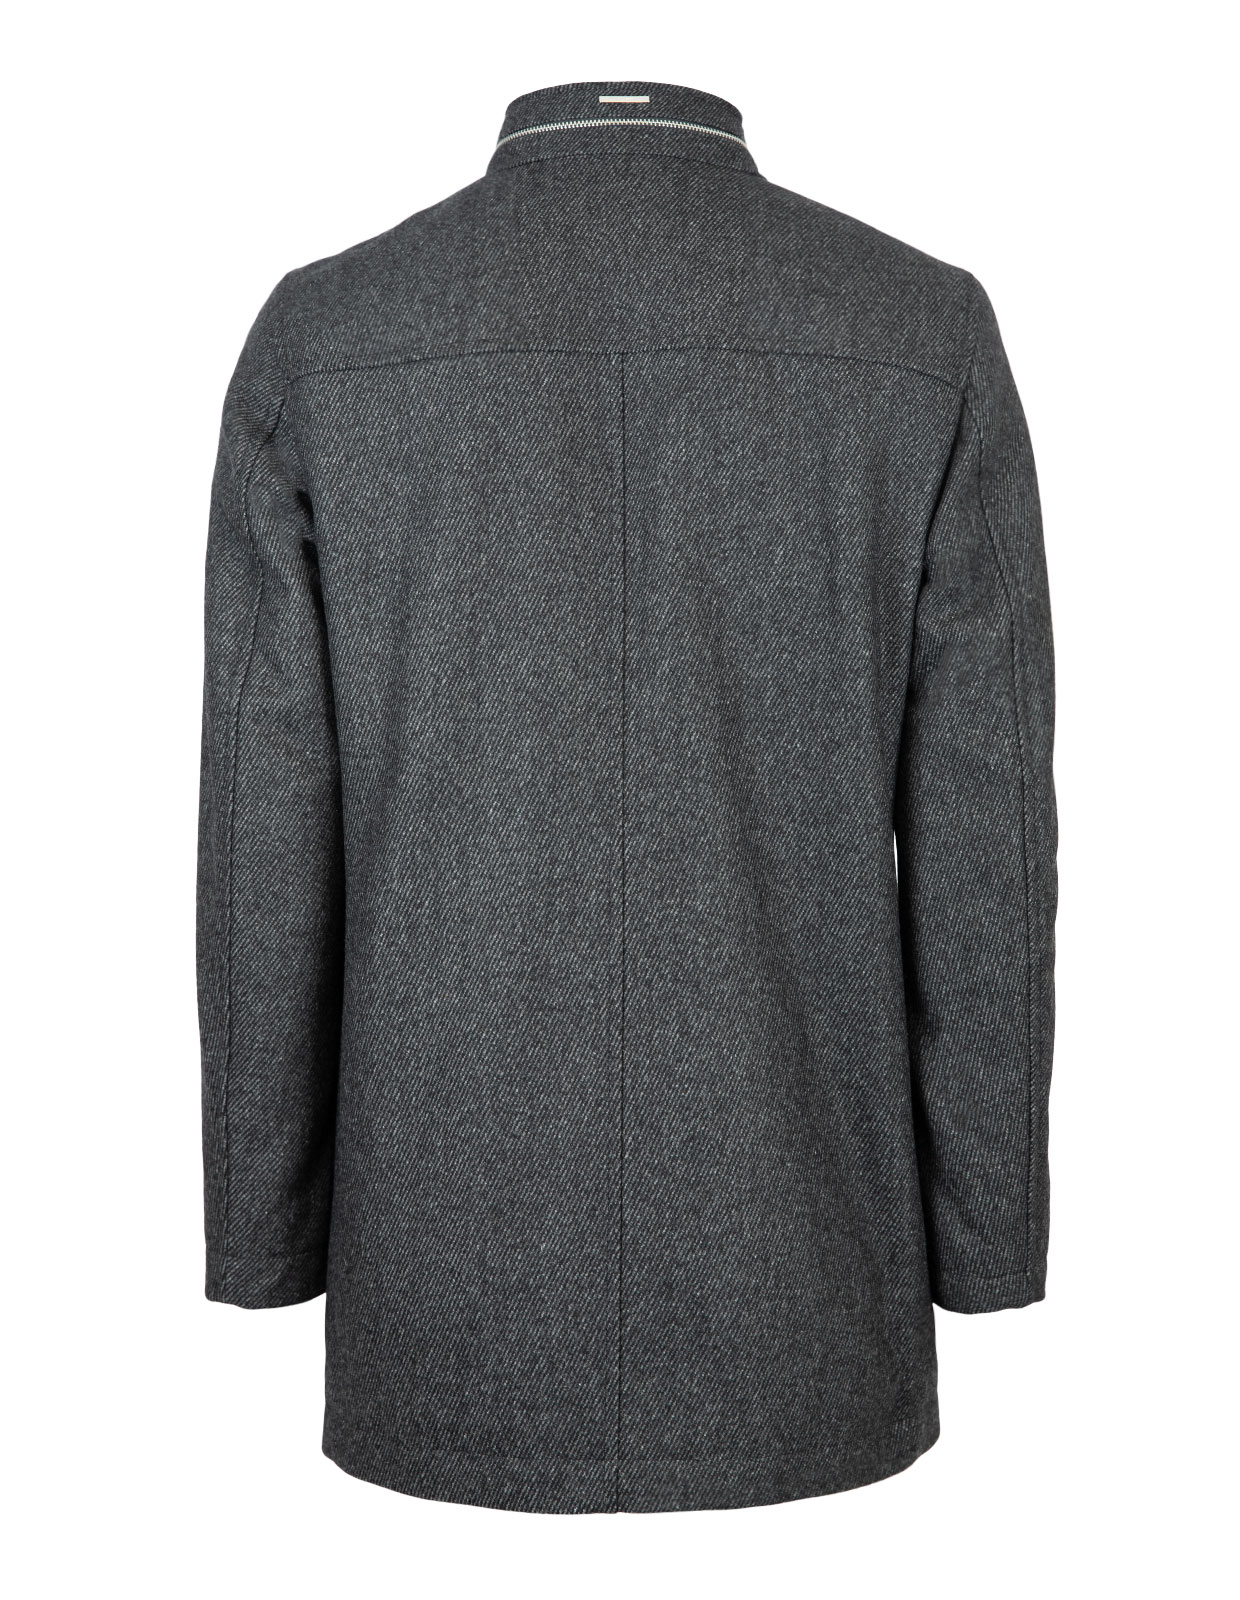 Camron4 Jacket Regular Fit Wool Blend Medium Grey